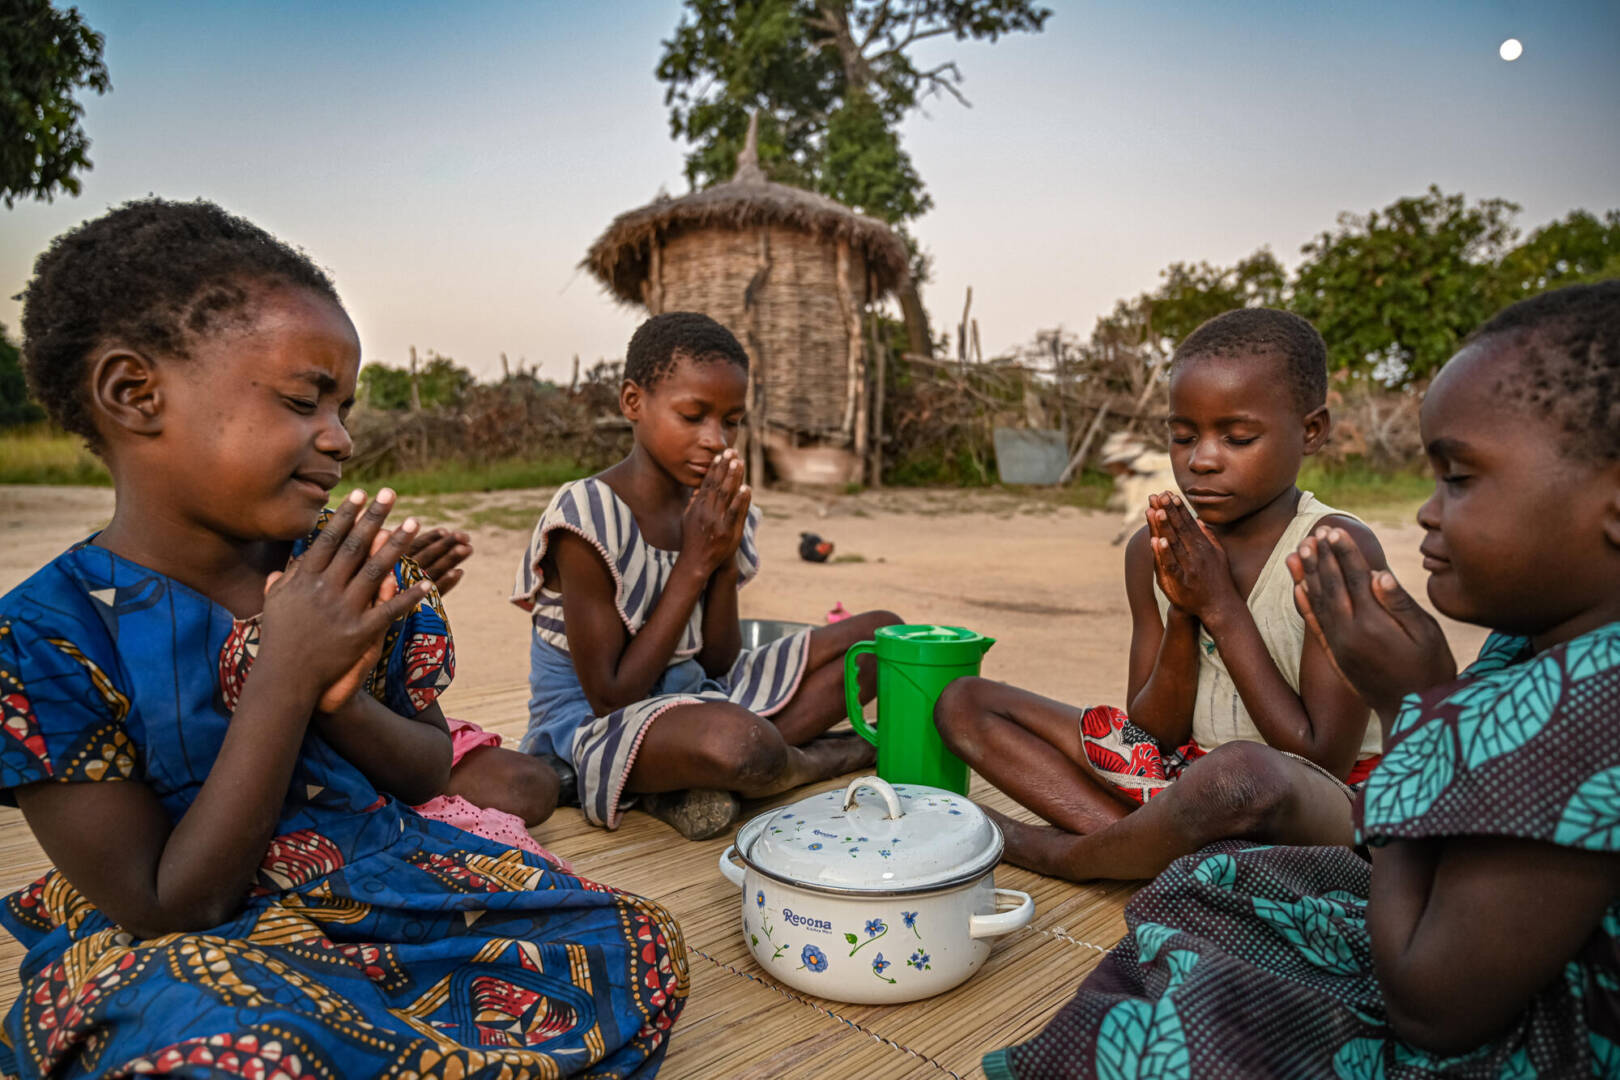 A group of Zambian children pray while sitting around a white pot.